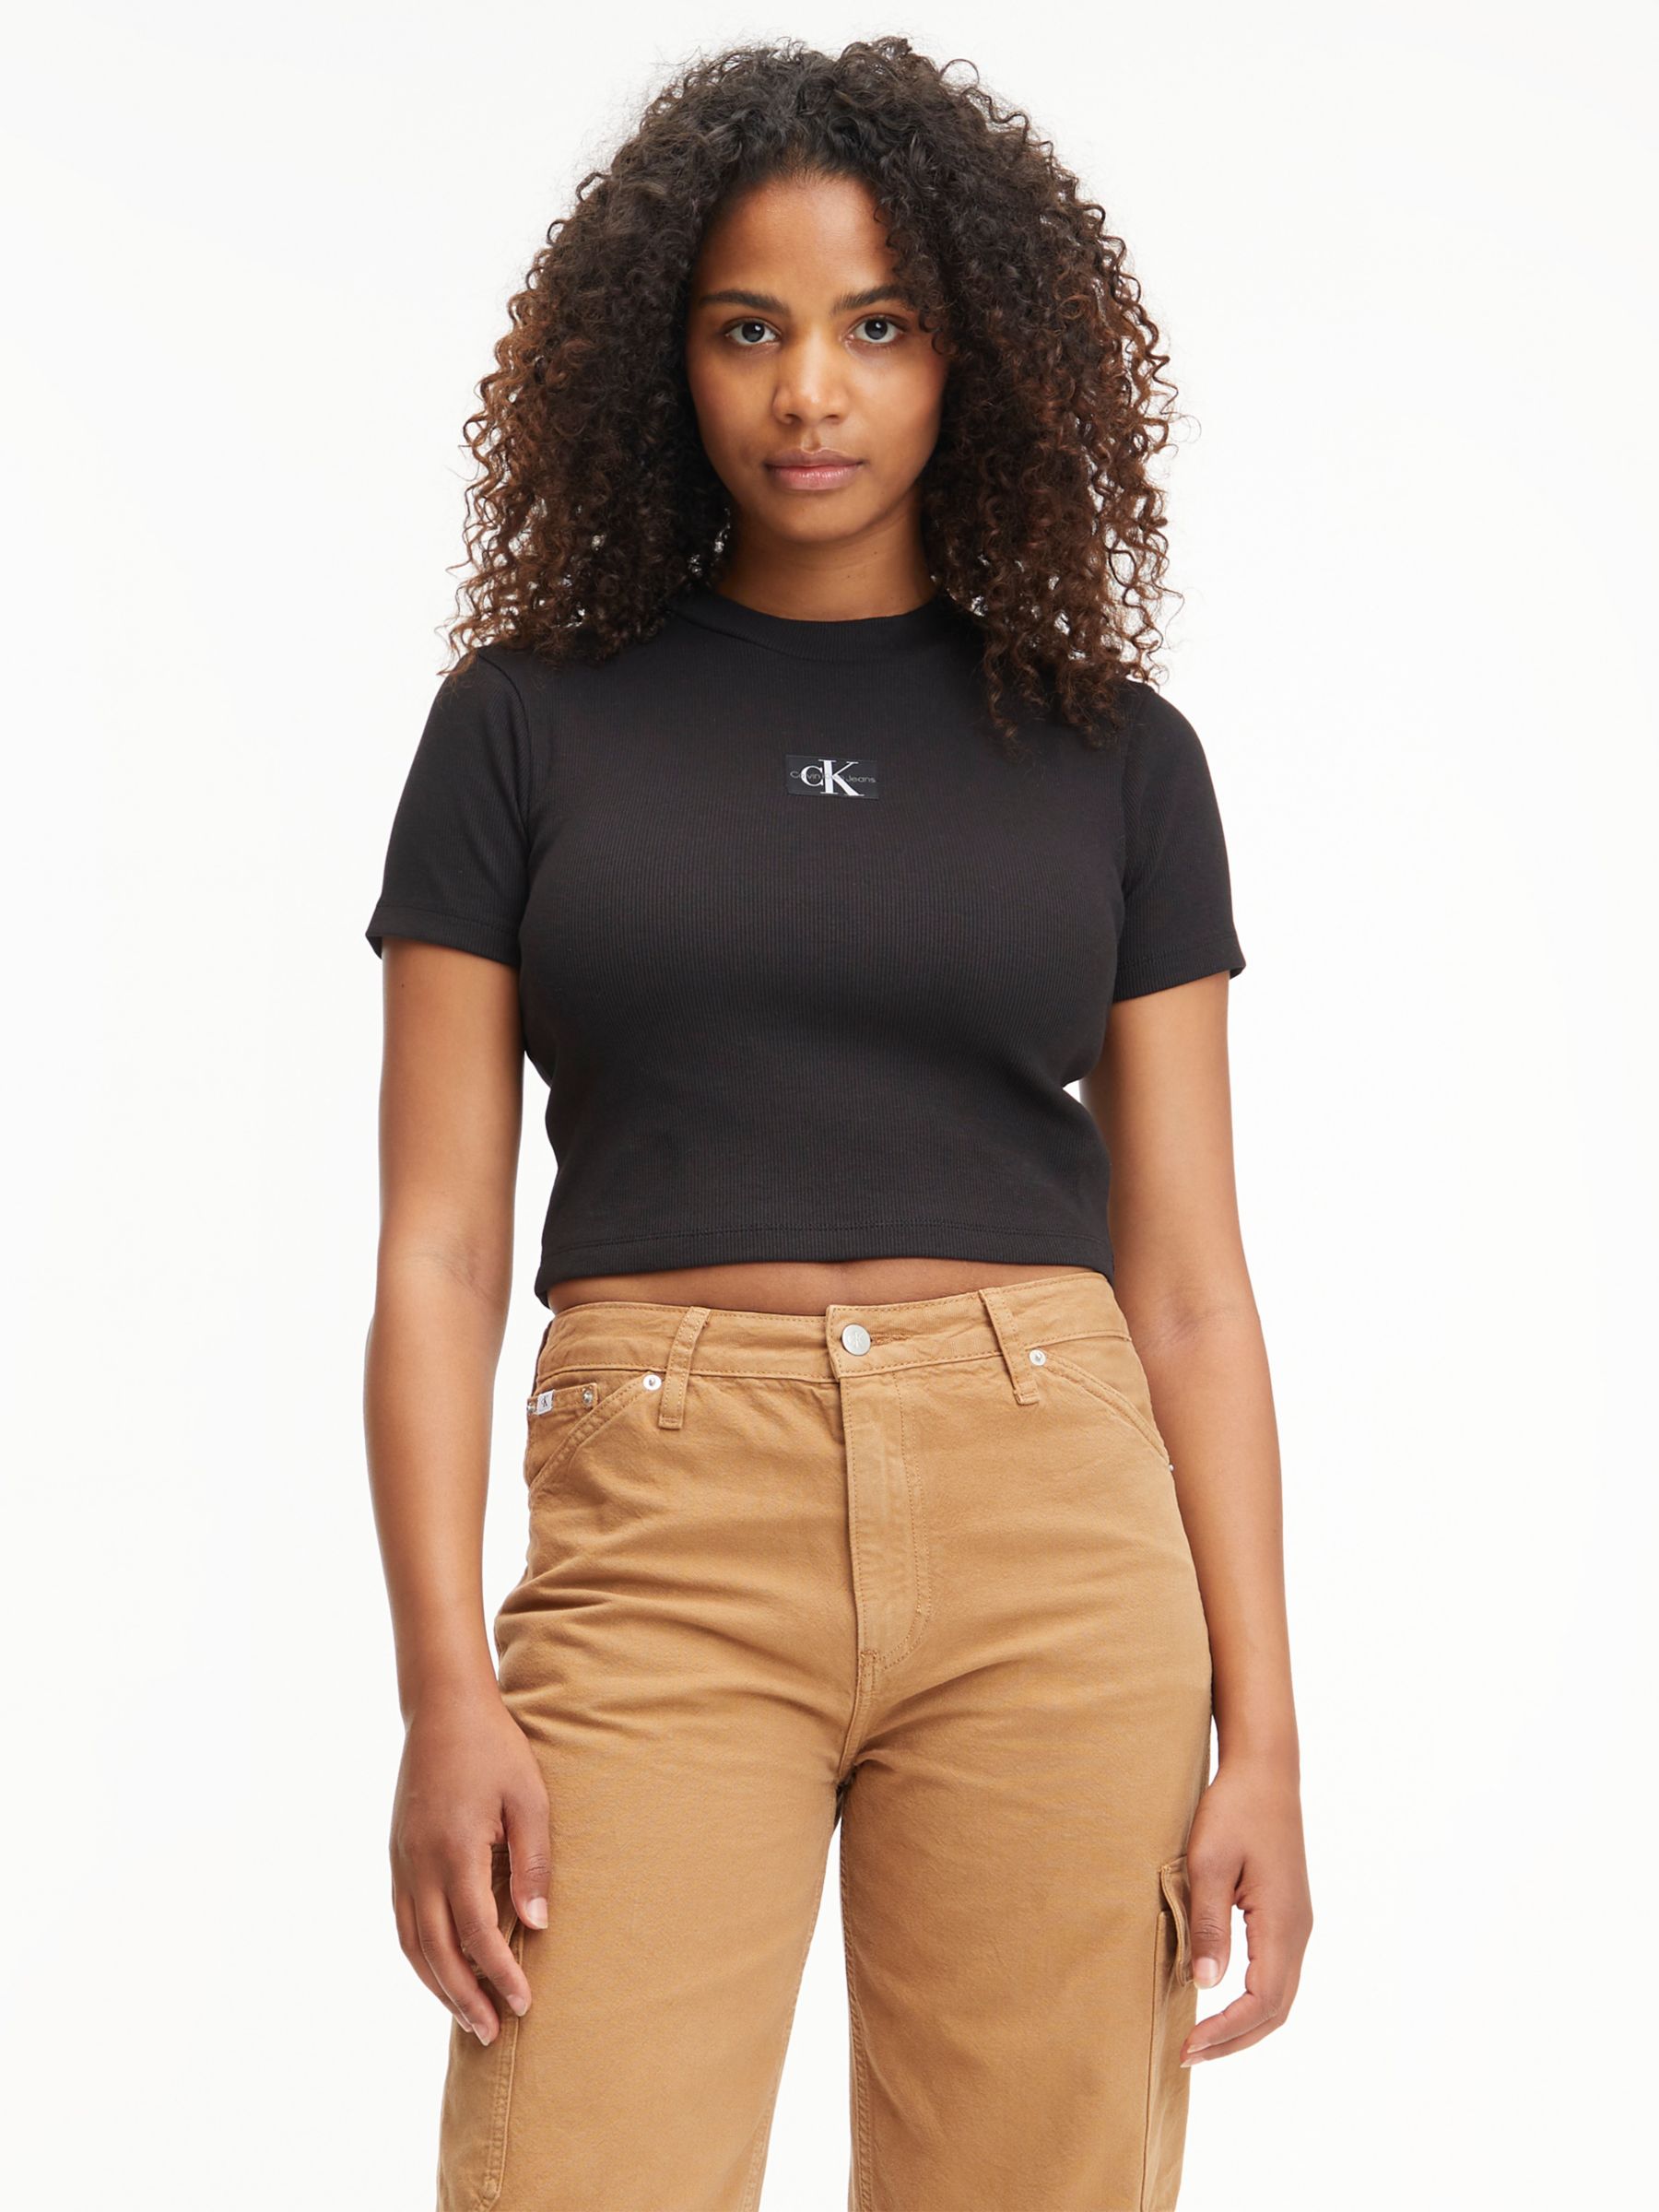 Calvin Klein Cropped Women's T-shirt